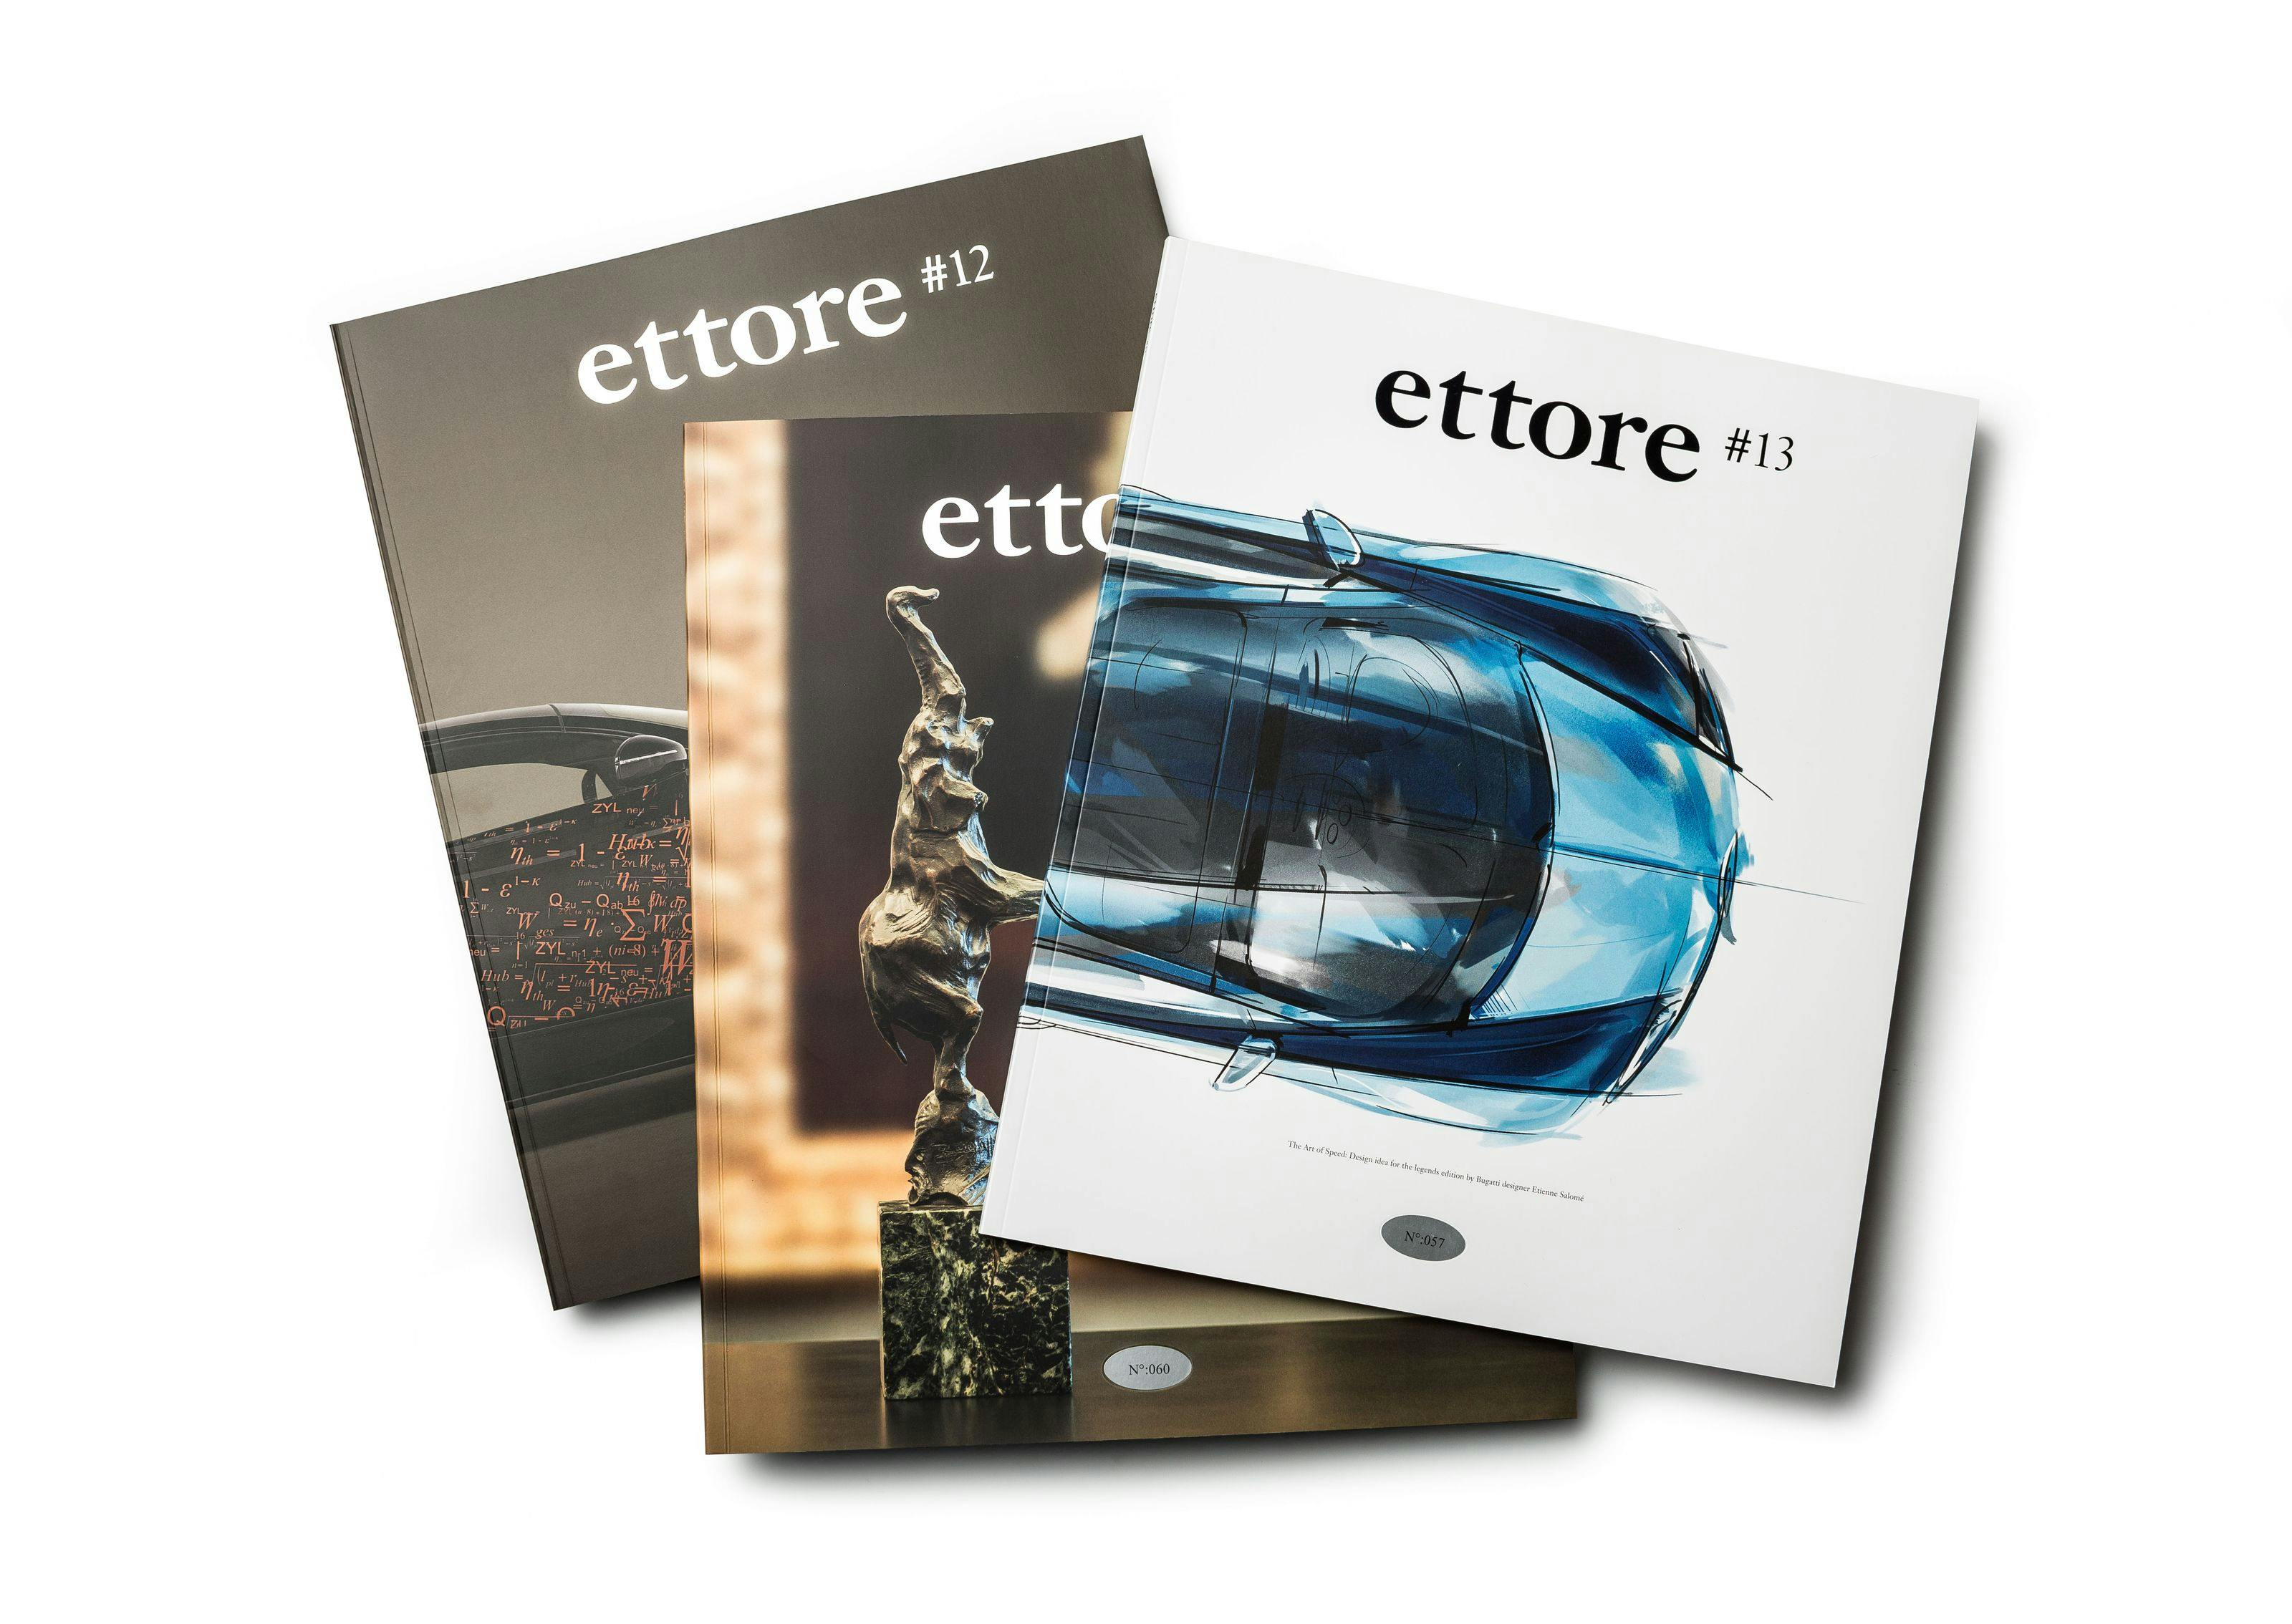 Automotive Brand Contest 2014: Bugatti customer magazine ettore receives award from German Design Council